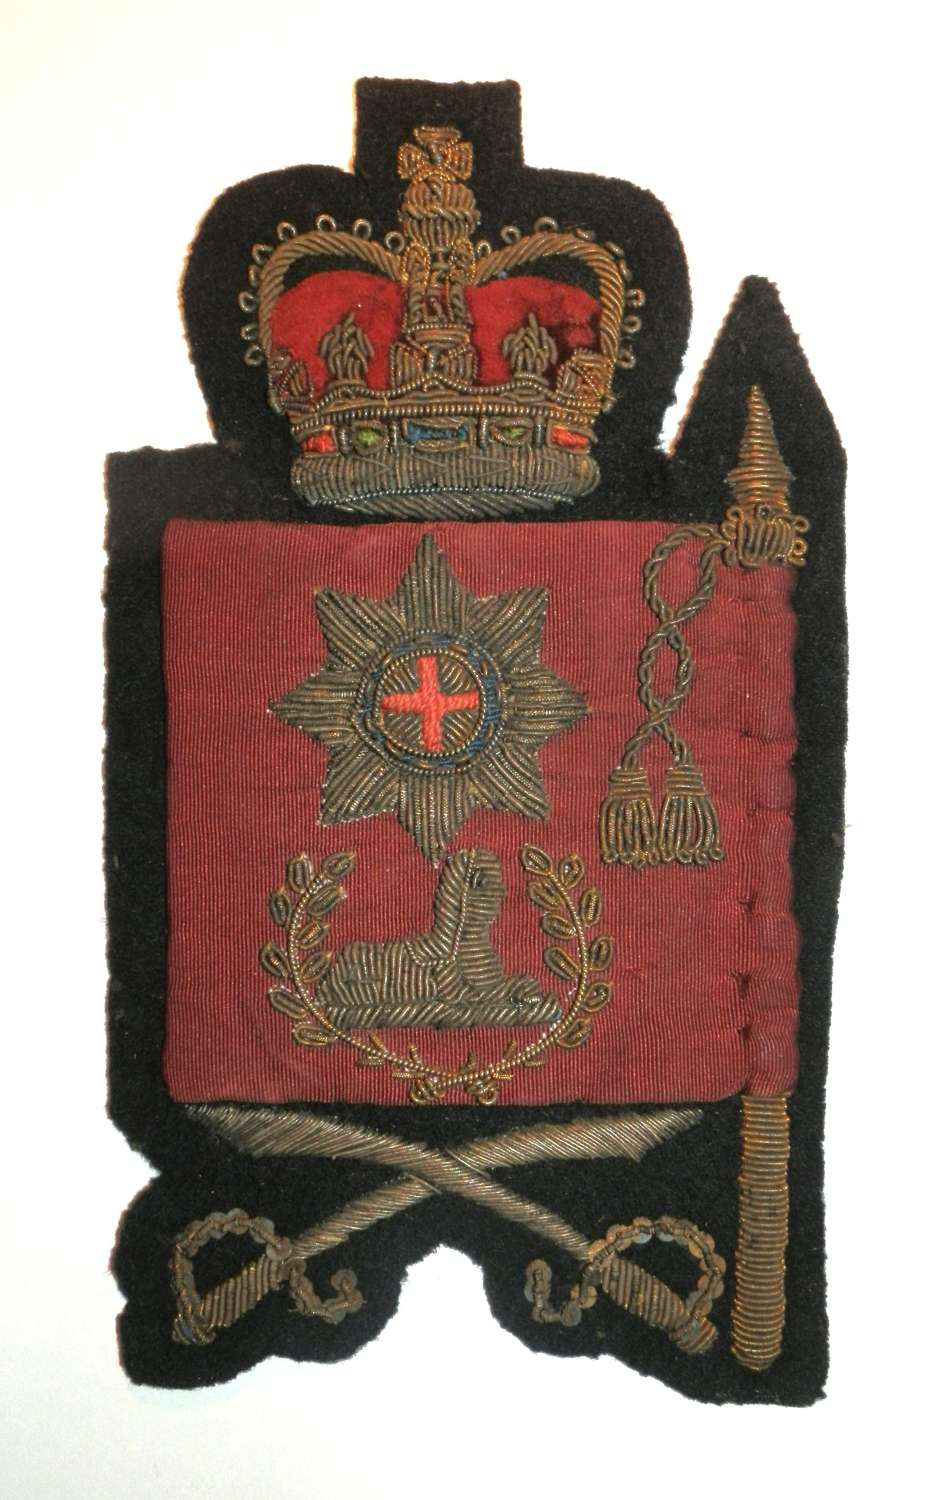 Coldstream Guards EIIR Warrant Officers Sleeve Badge.